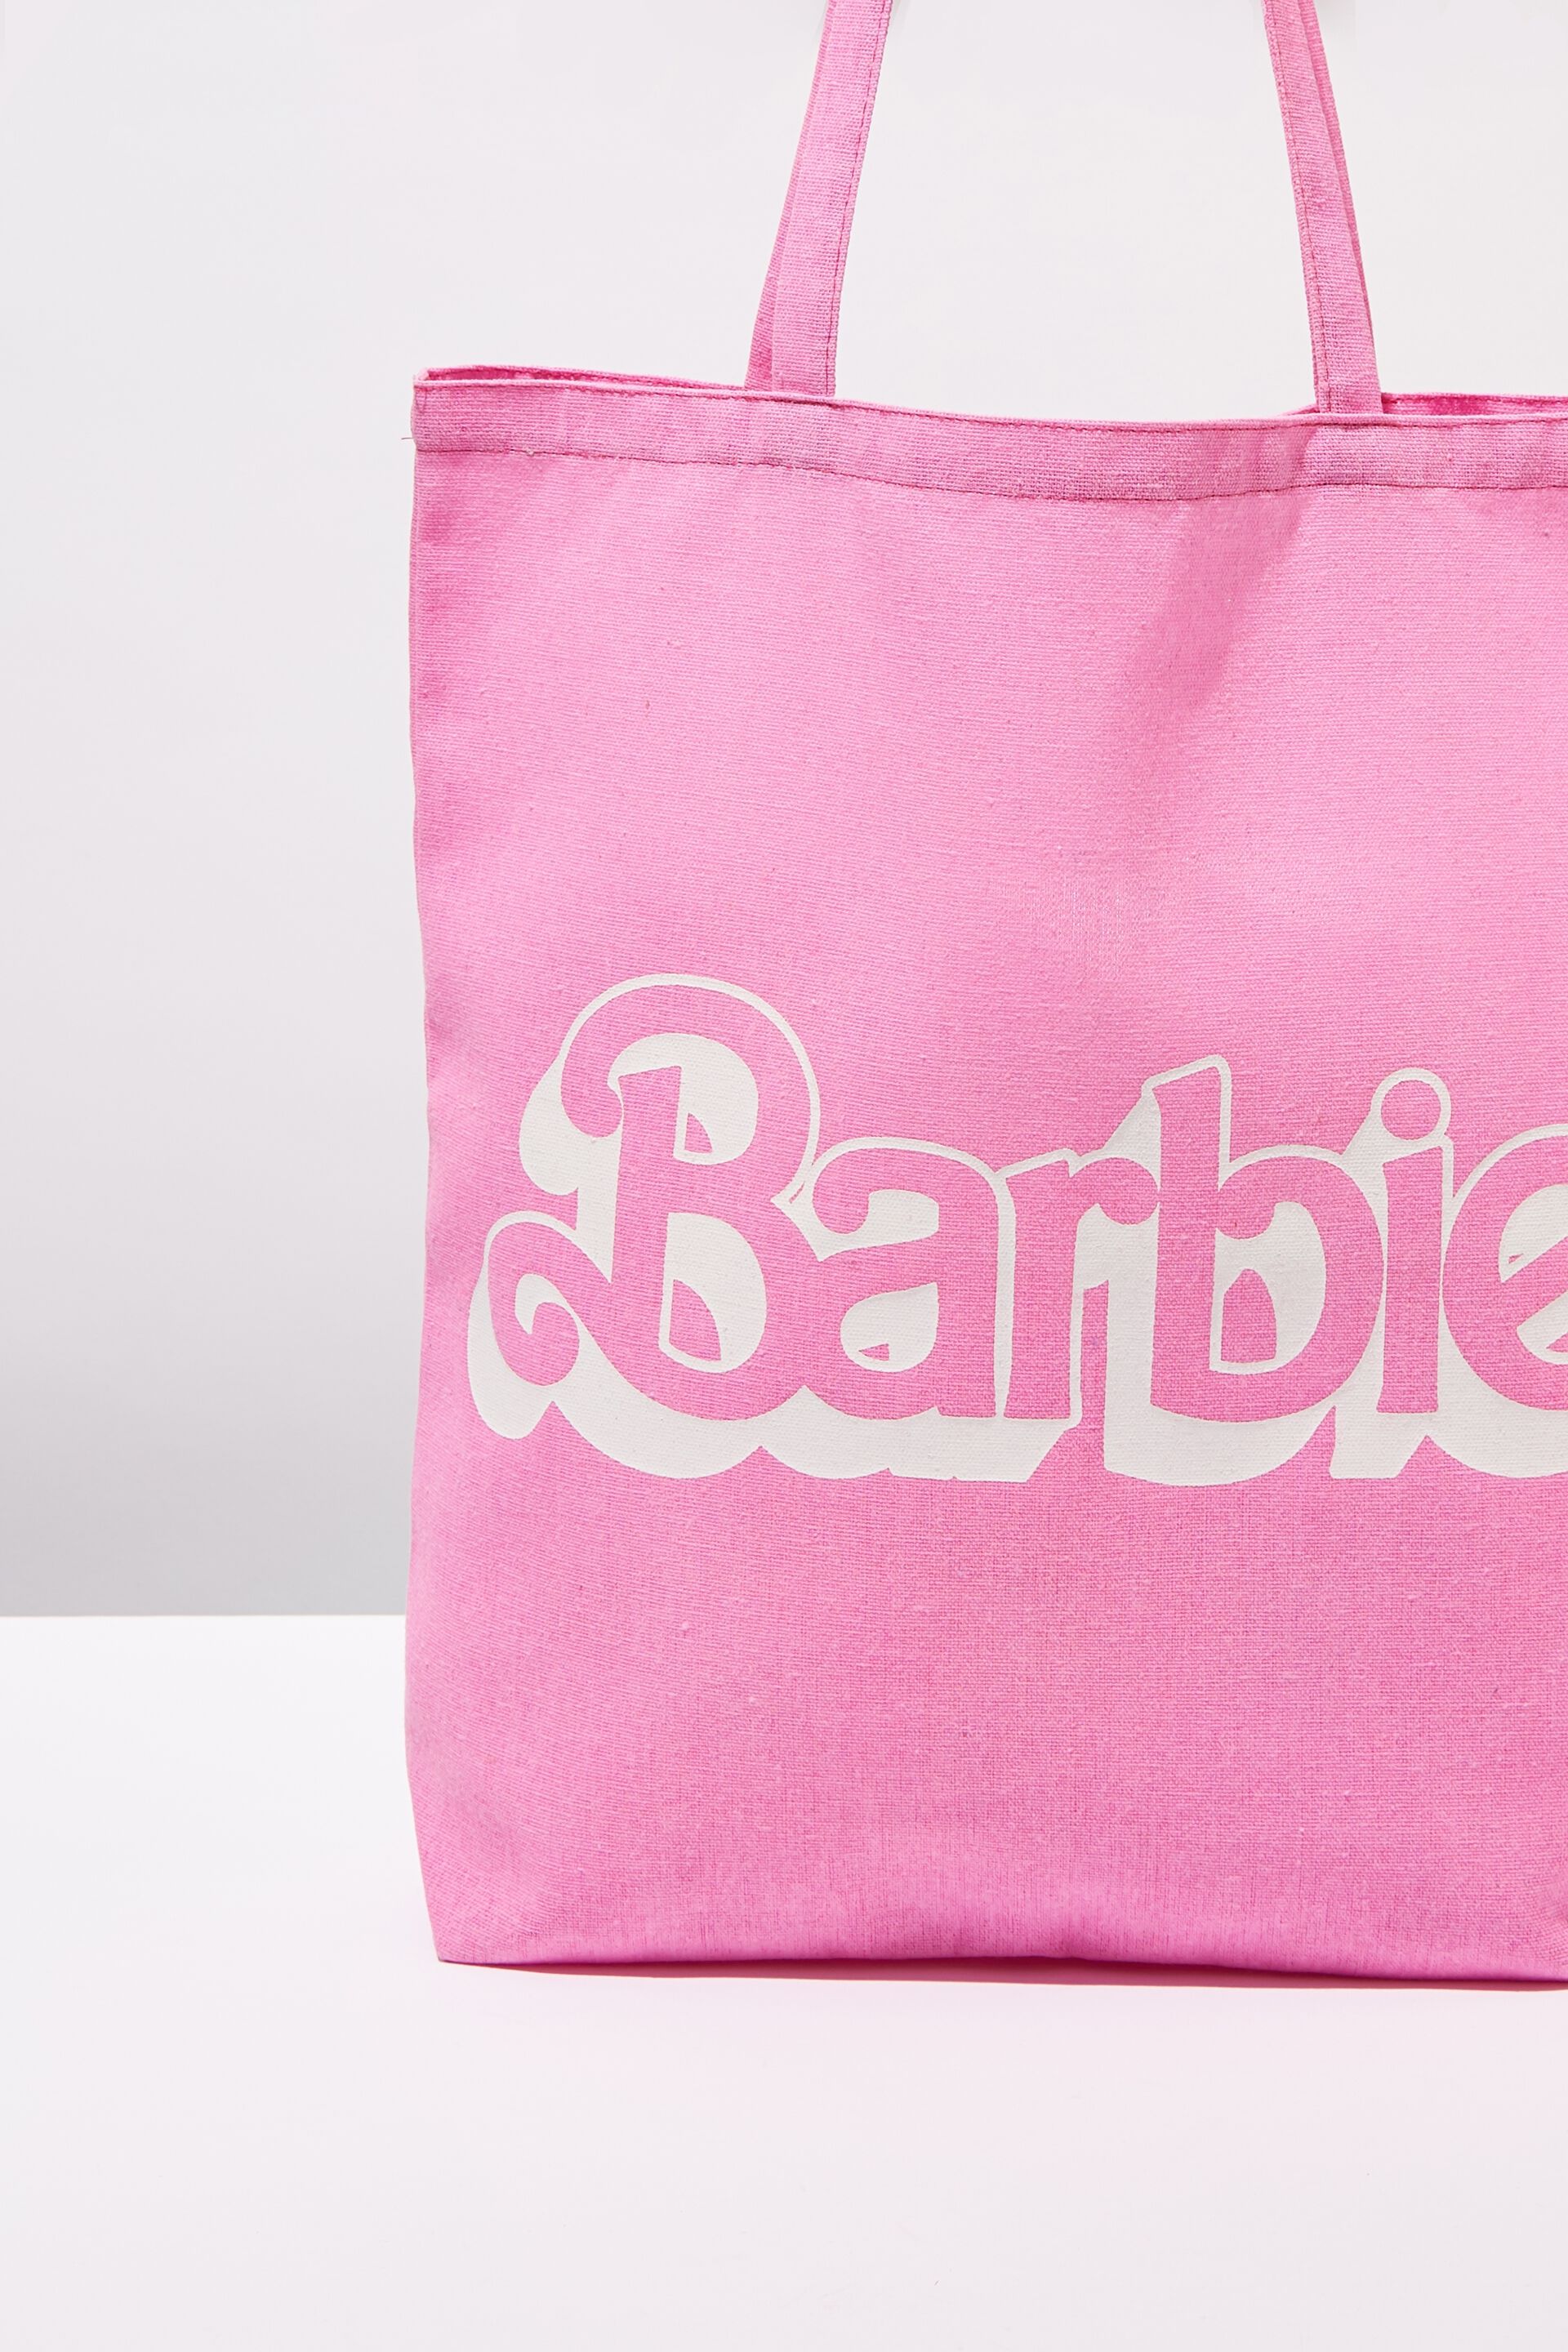 barbie handbags for adults